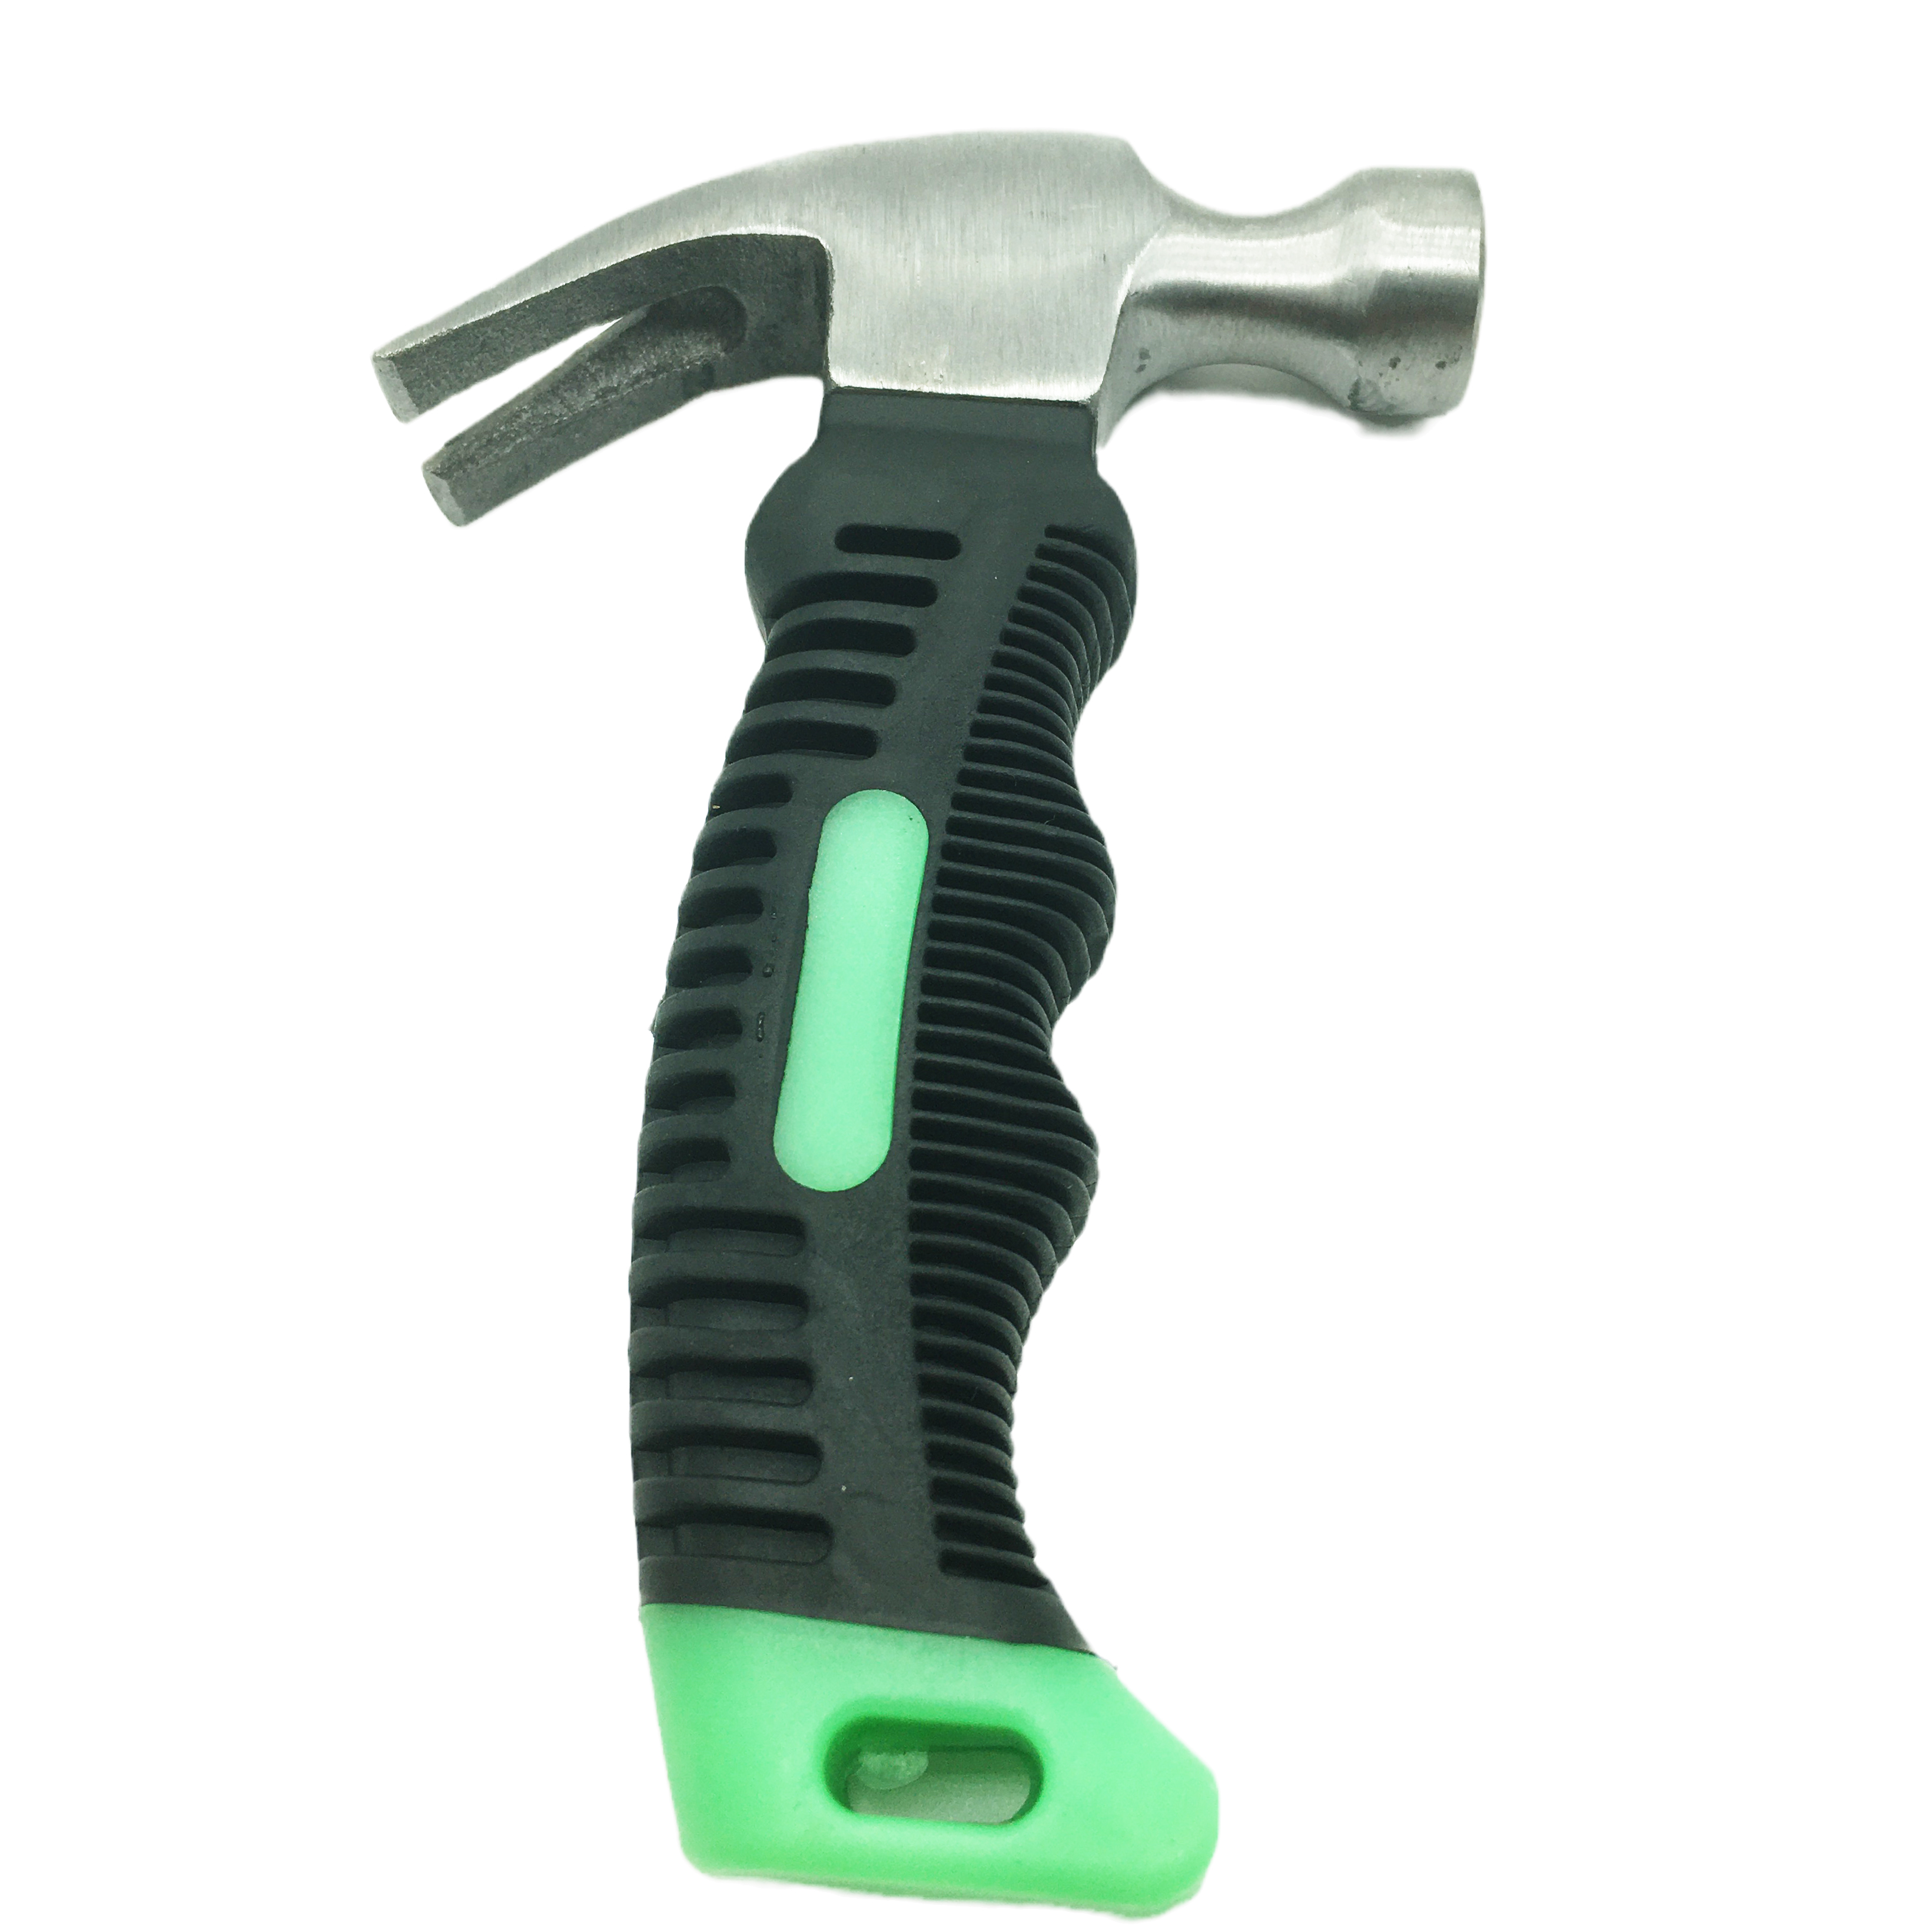 Mini Claw Hammer Household Small Steel Hammer Hardware Tool Hammer HA-A1